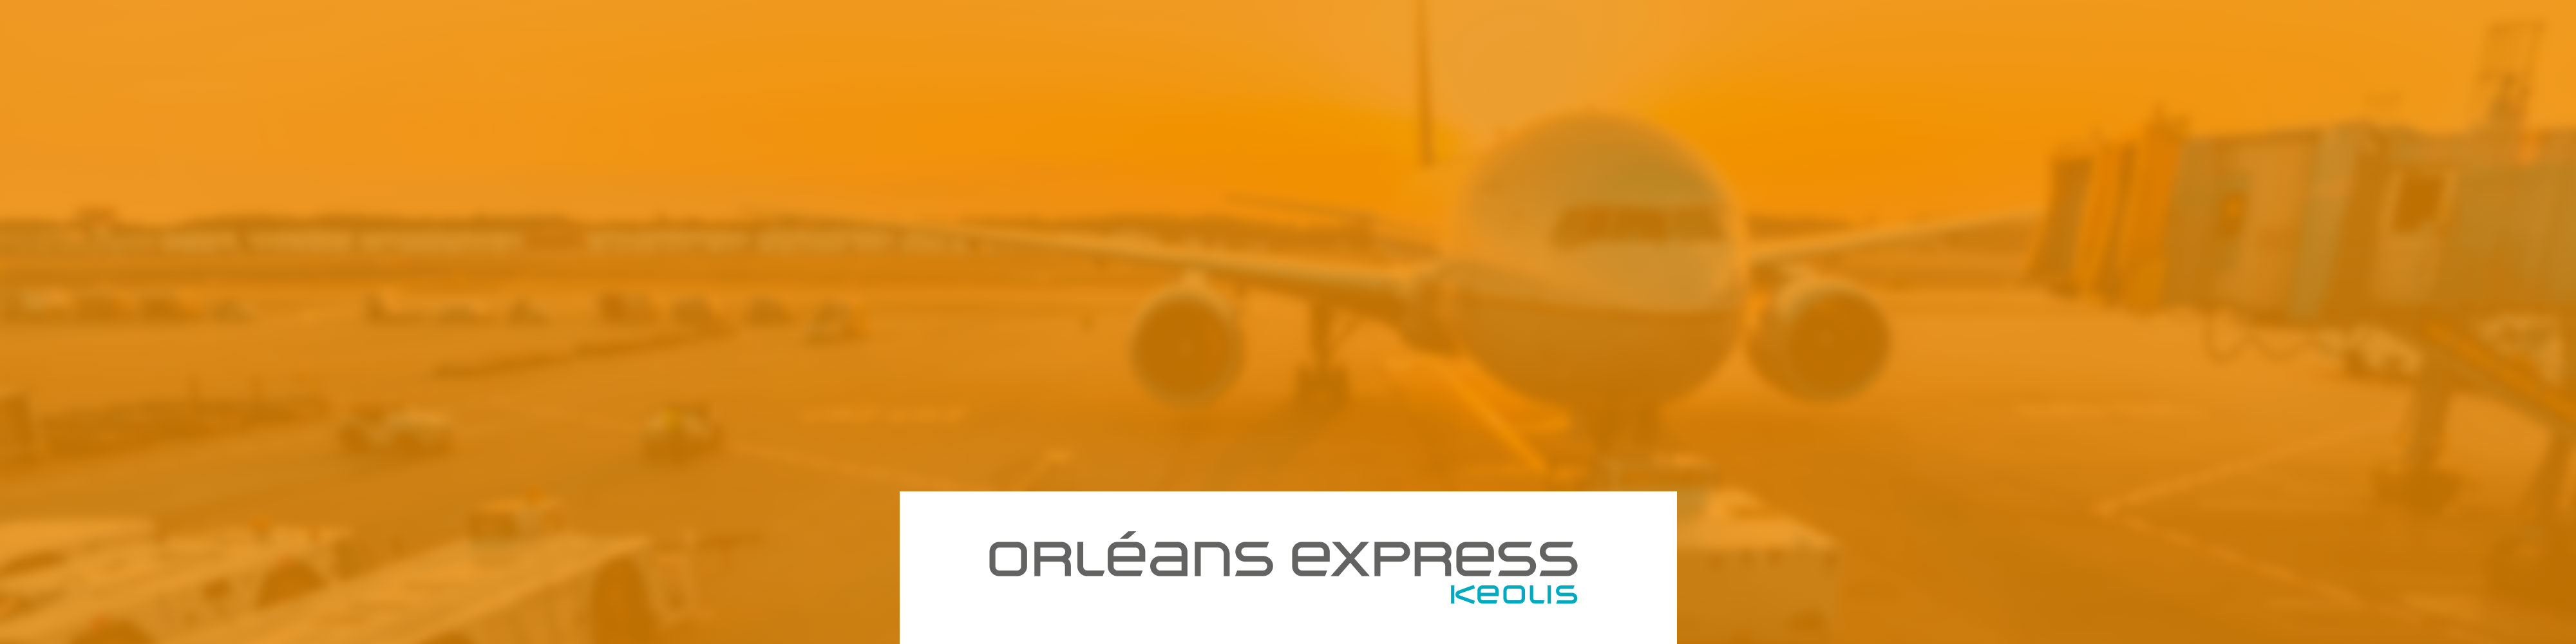 offre-orleans-express-landing